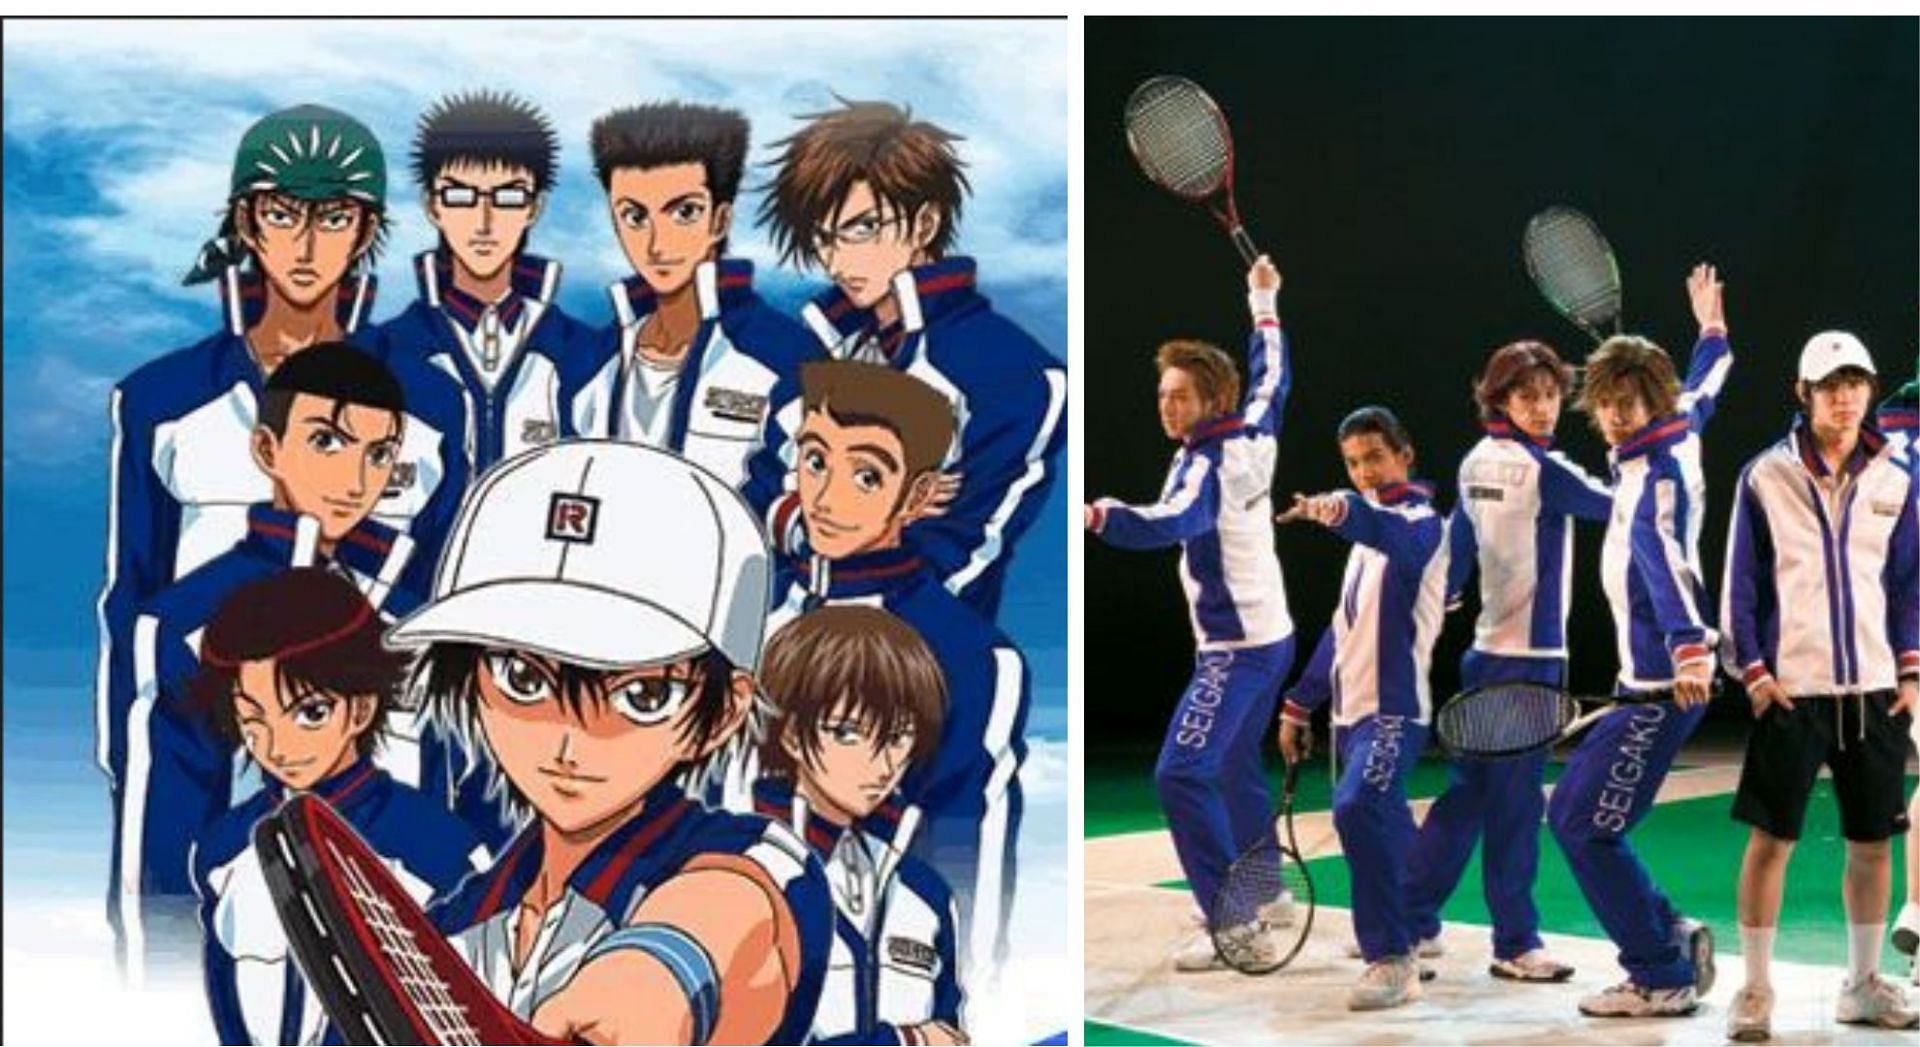 Prince of Tennis Anime and Live (Image via Sportskeeda)